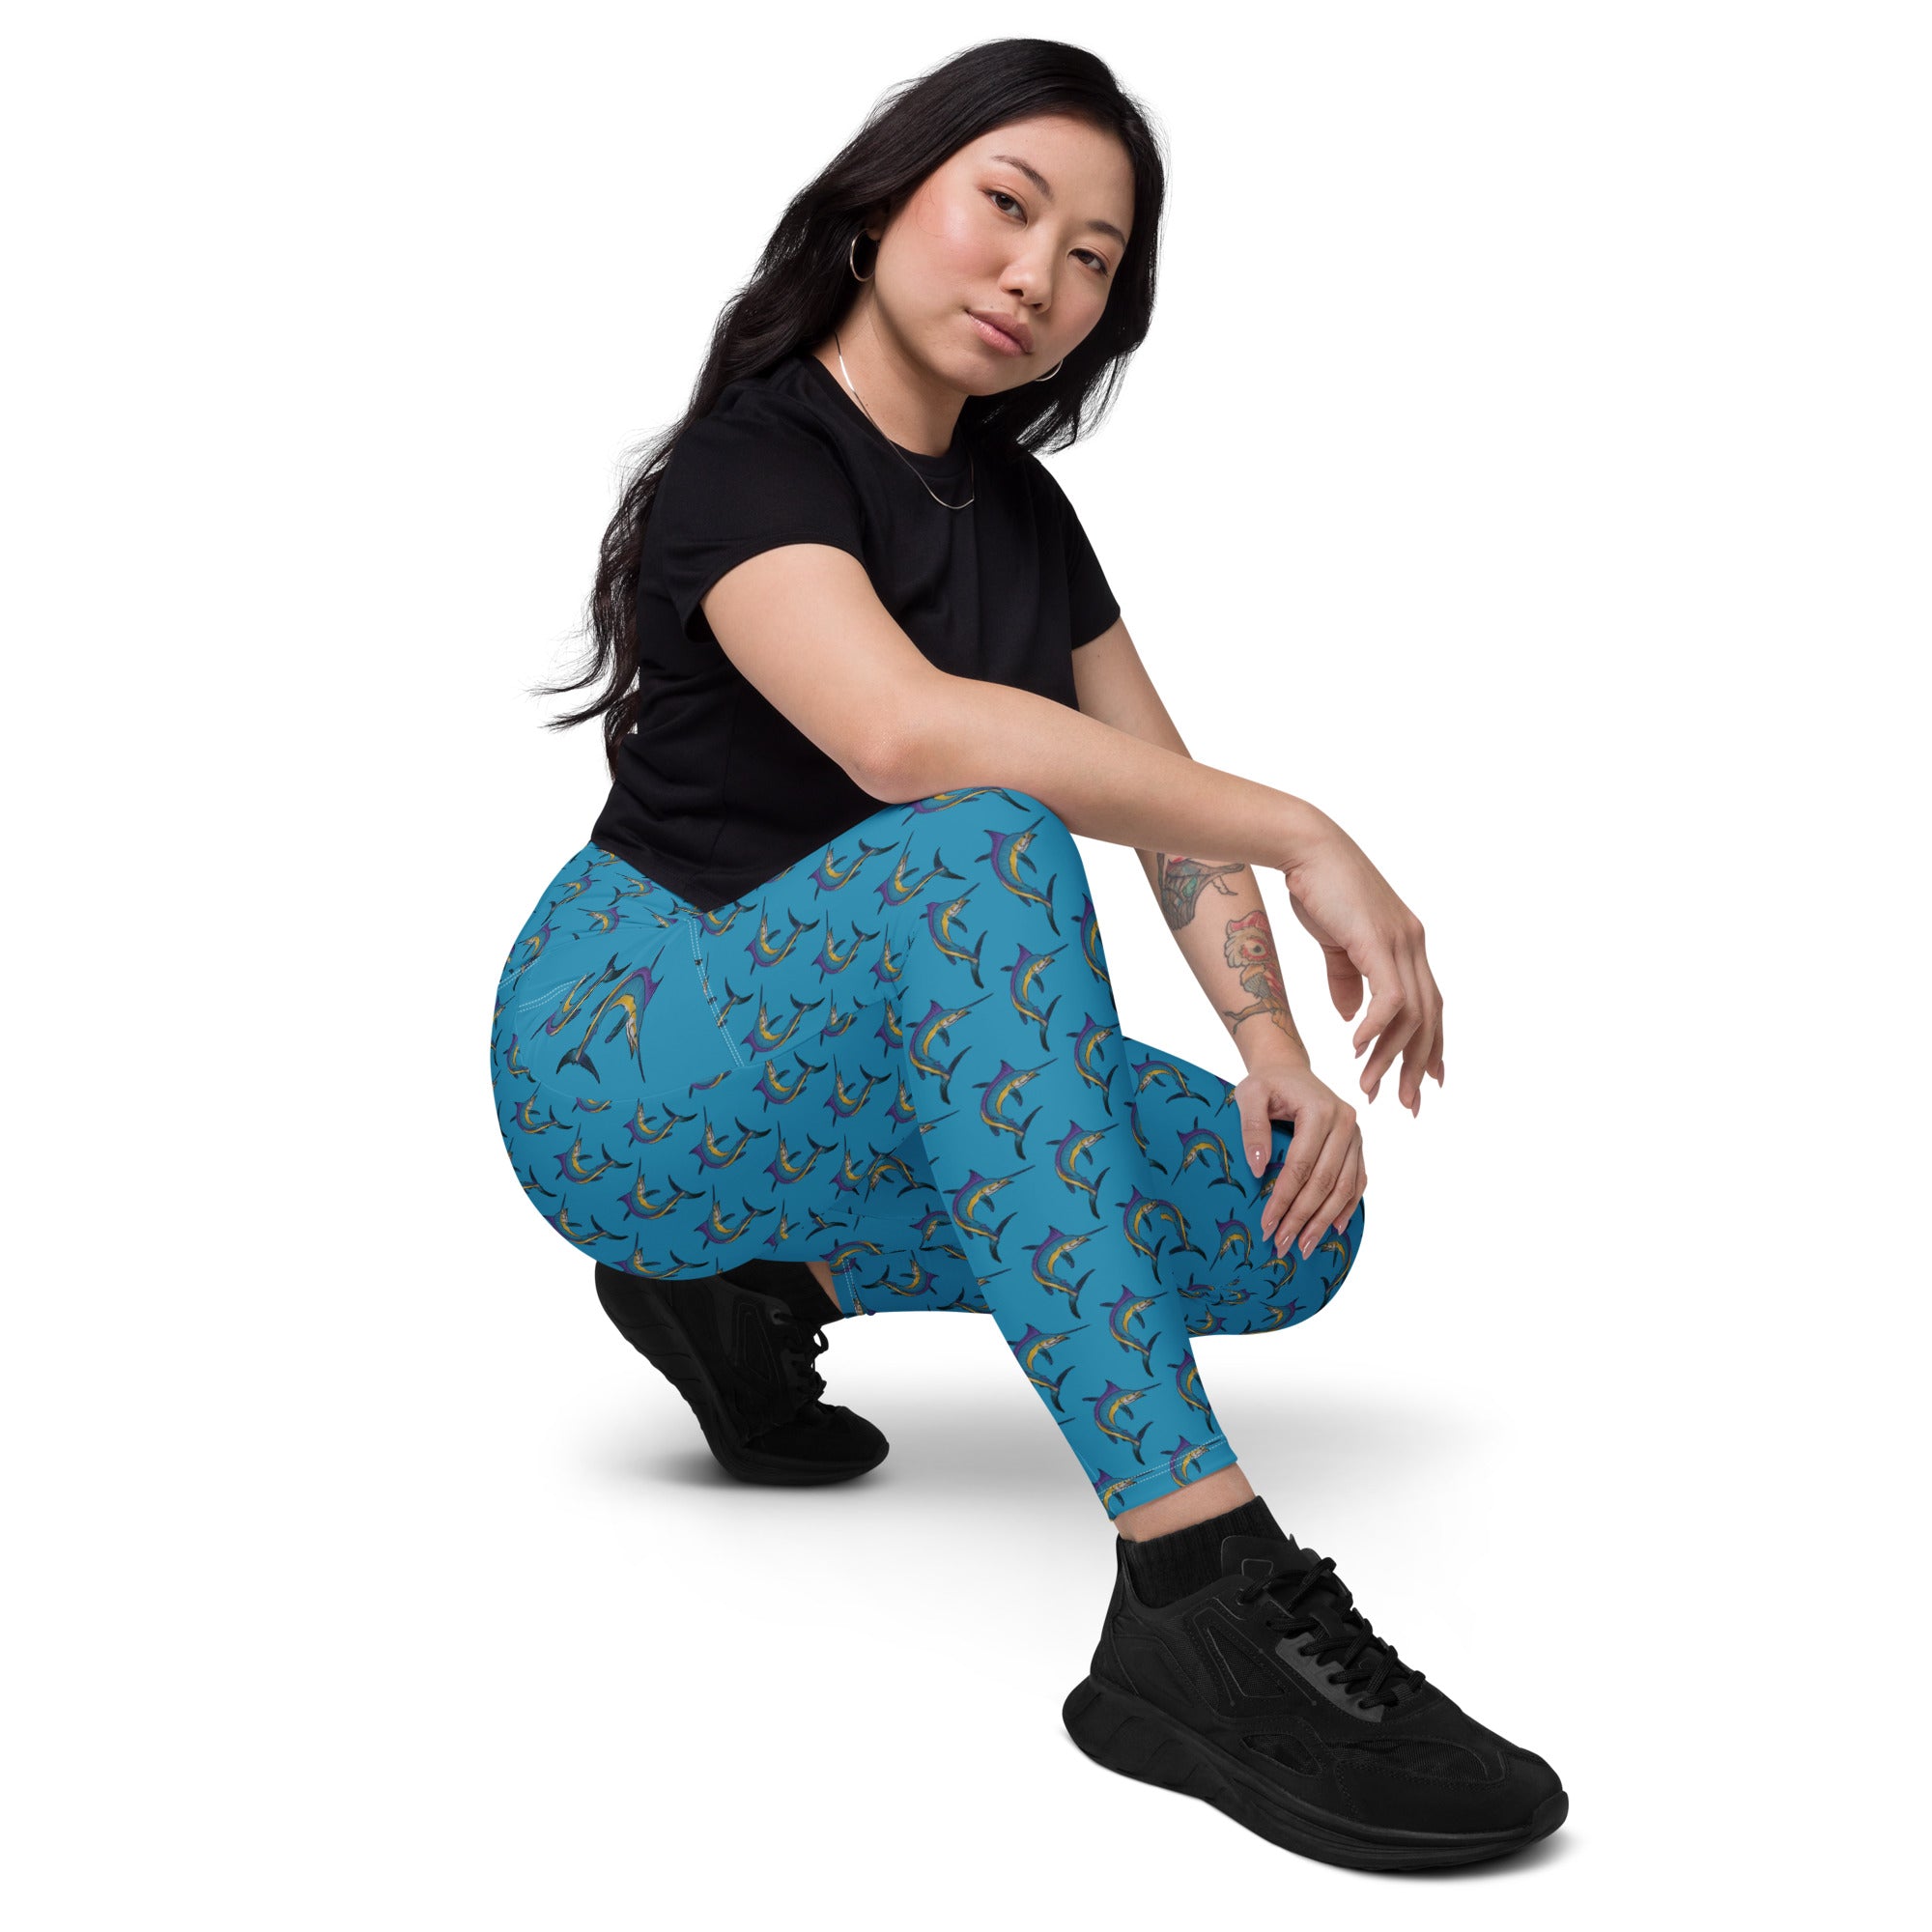 Buy Buy That Trendz Combo Pack of 3 Skinny Fit 3/4 Capris Leggings for  Women Black Light Skin Navy Large at Amazon.in